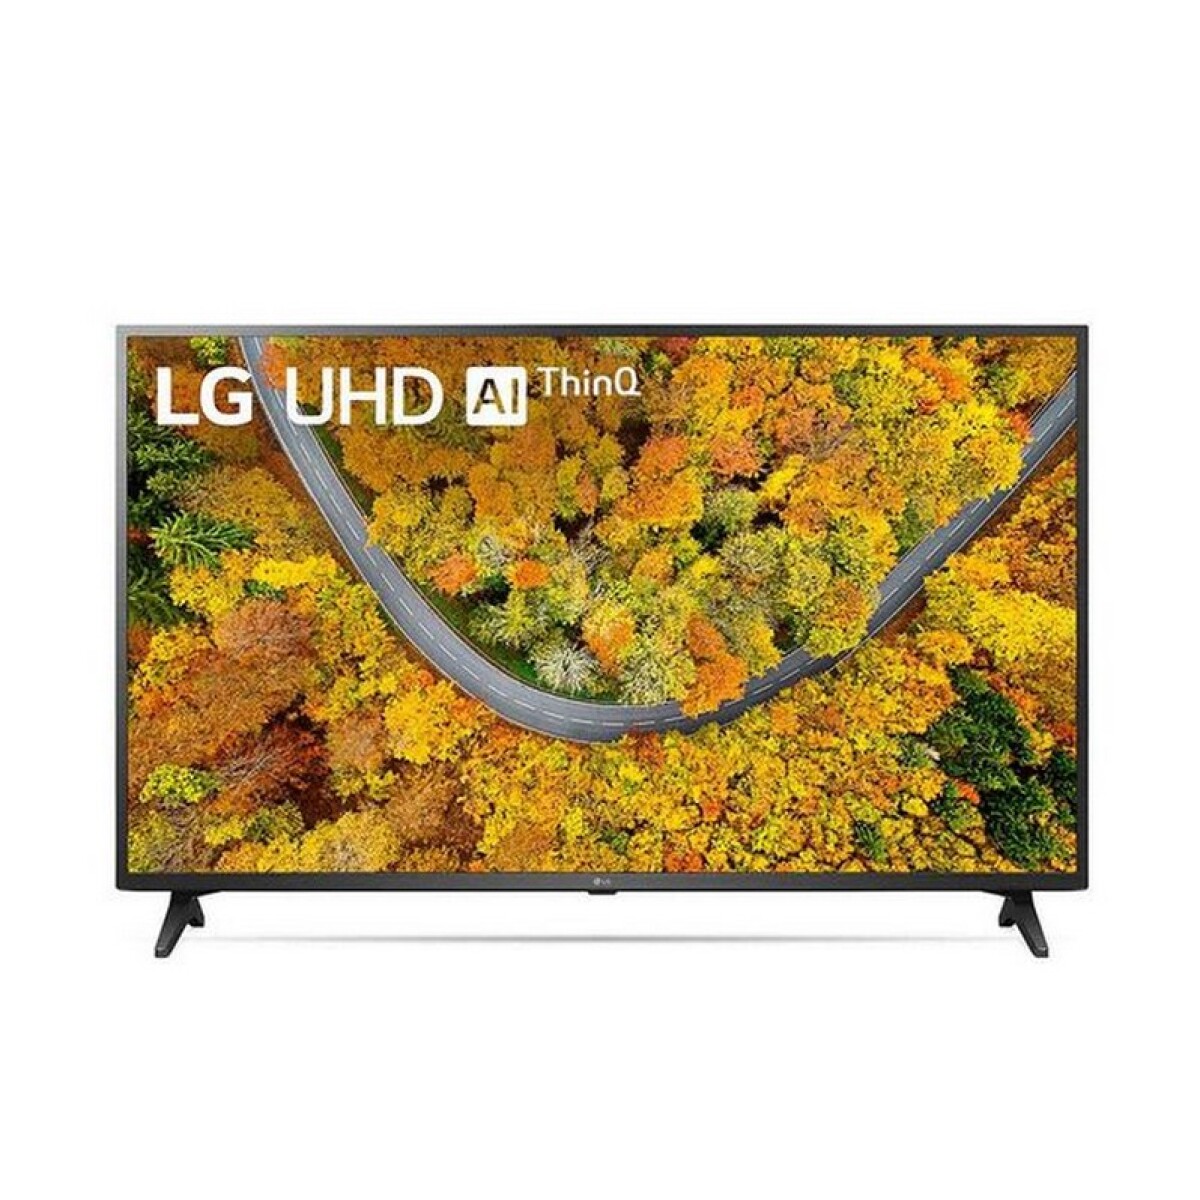 TV LG 50" LED SMART TV UHD 